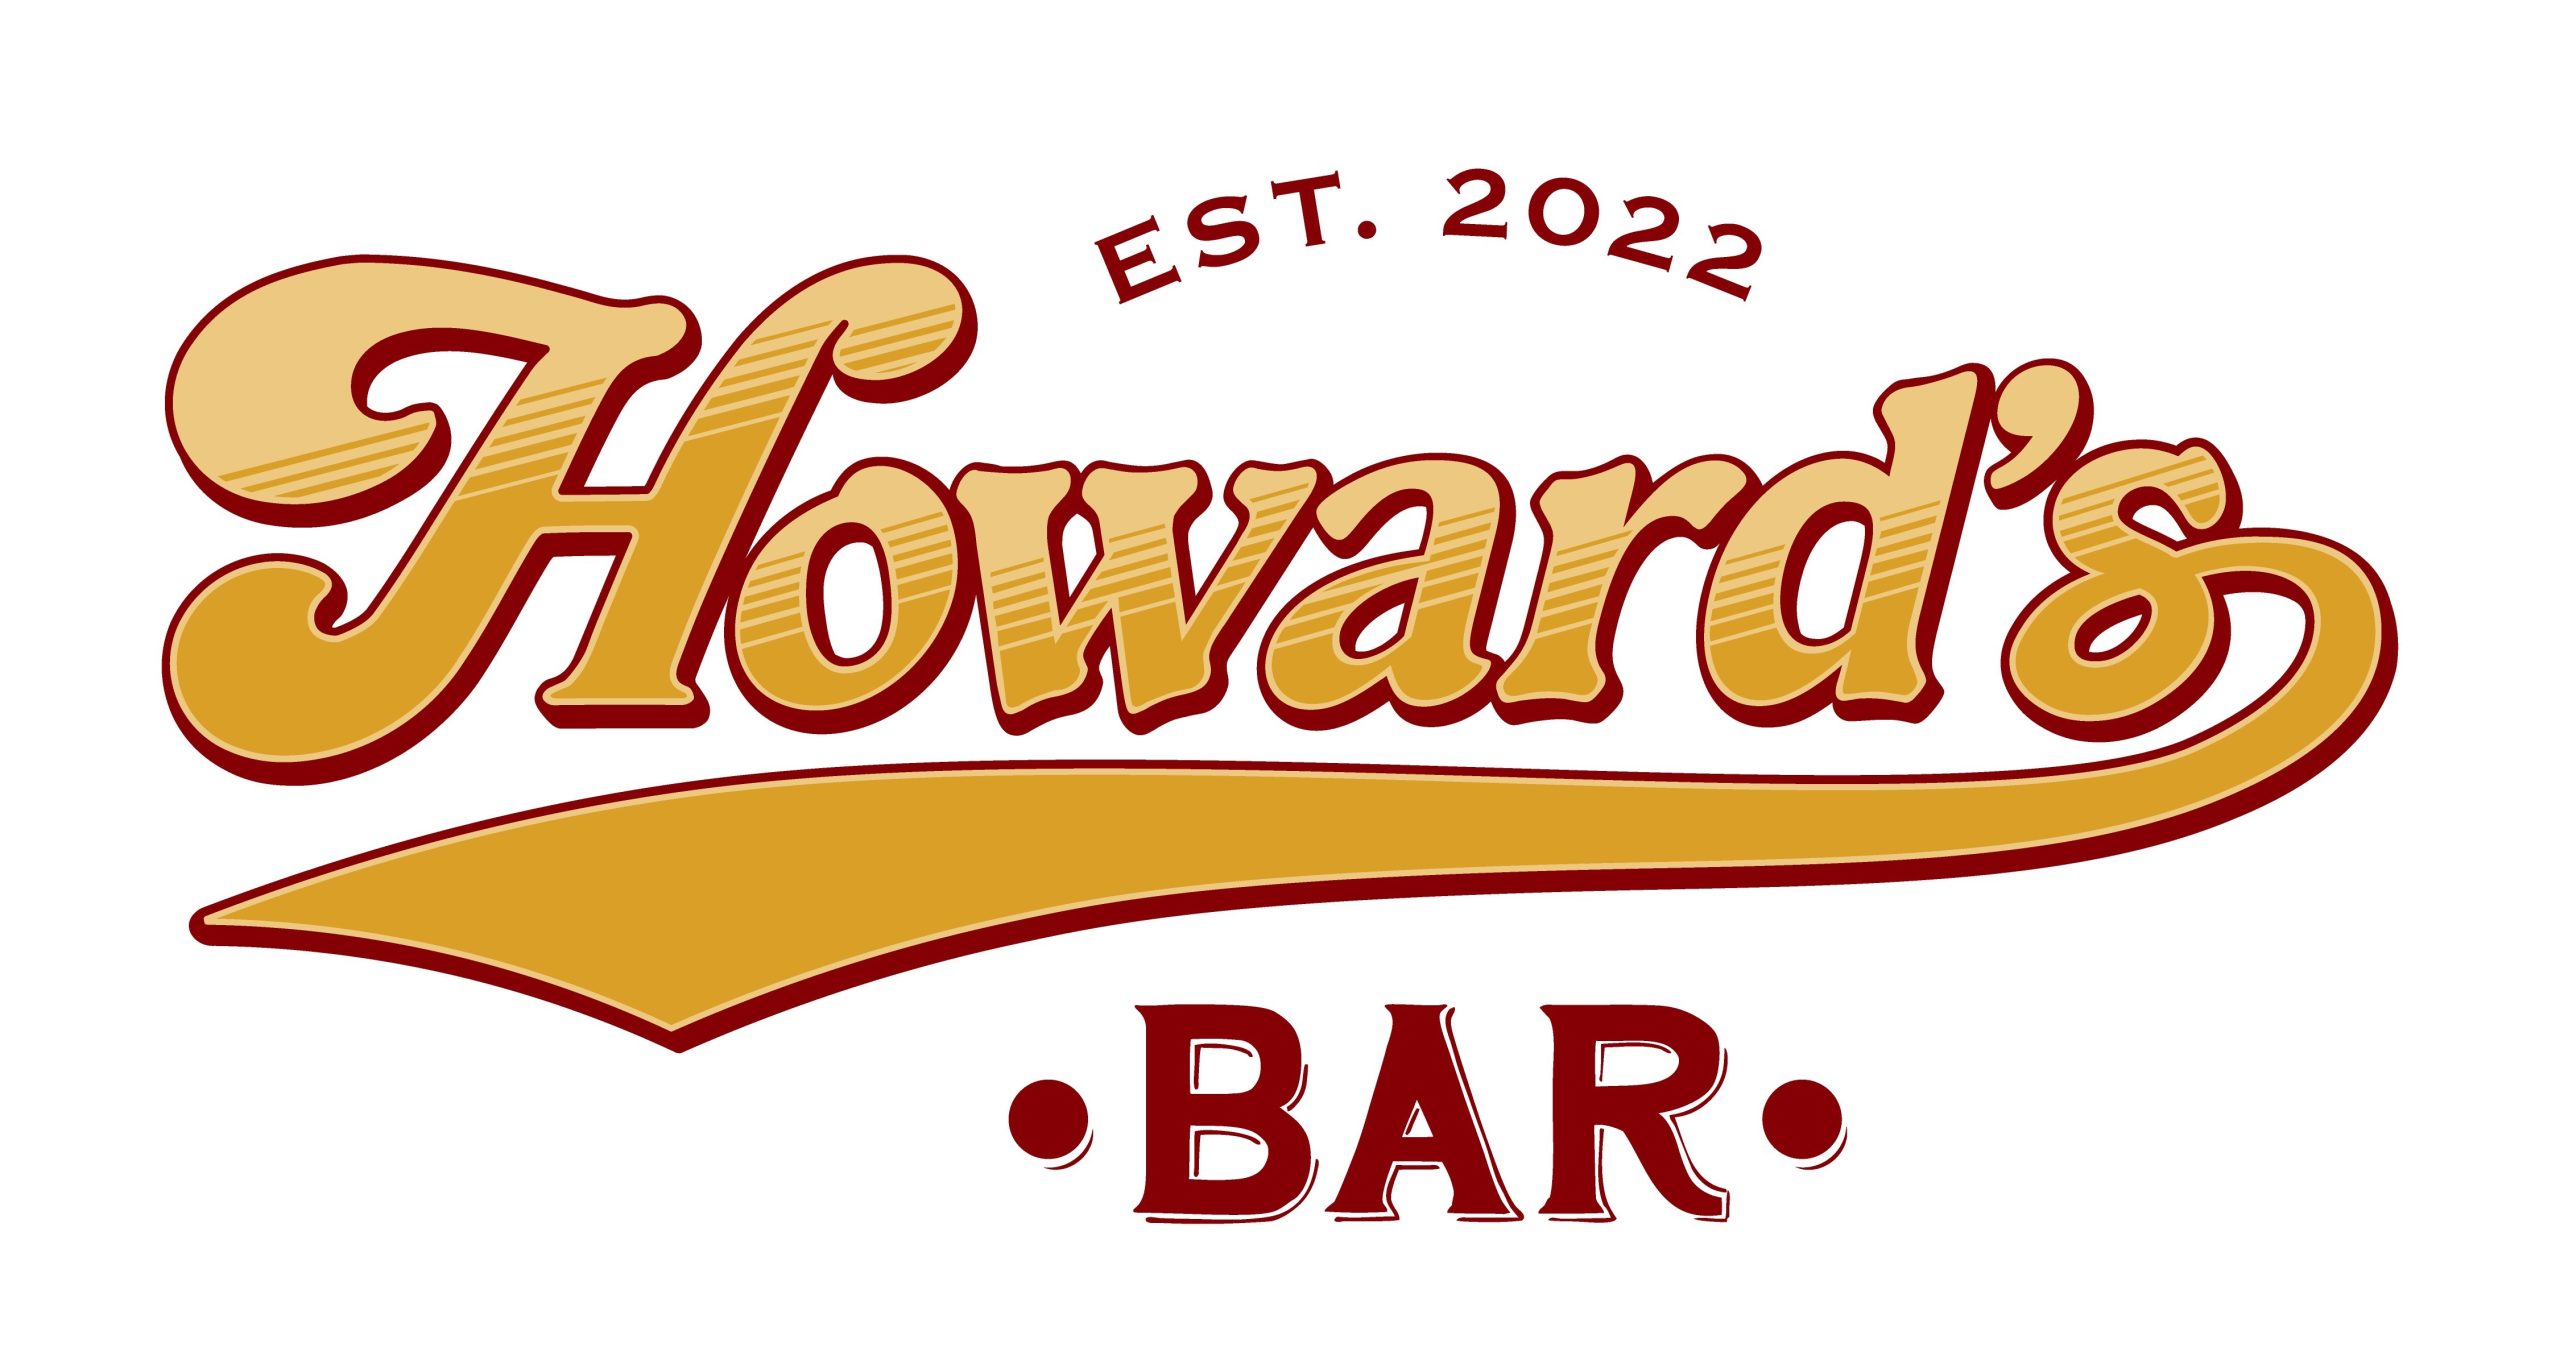 Howard's Bar